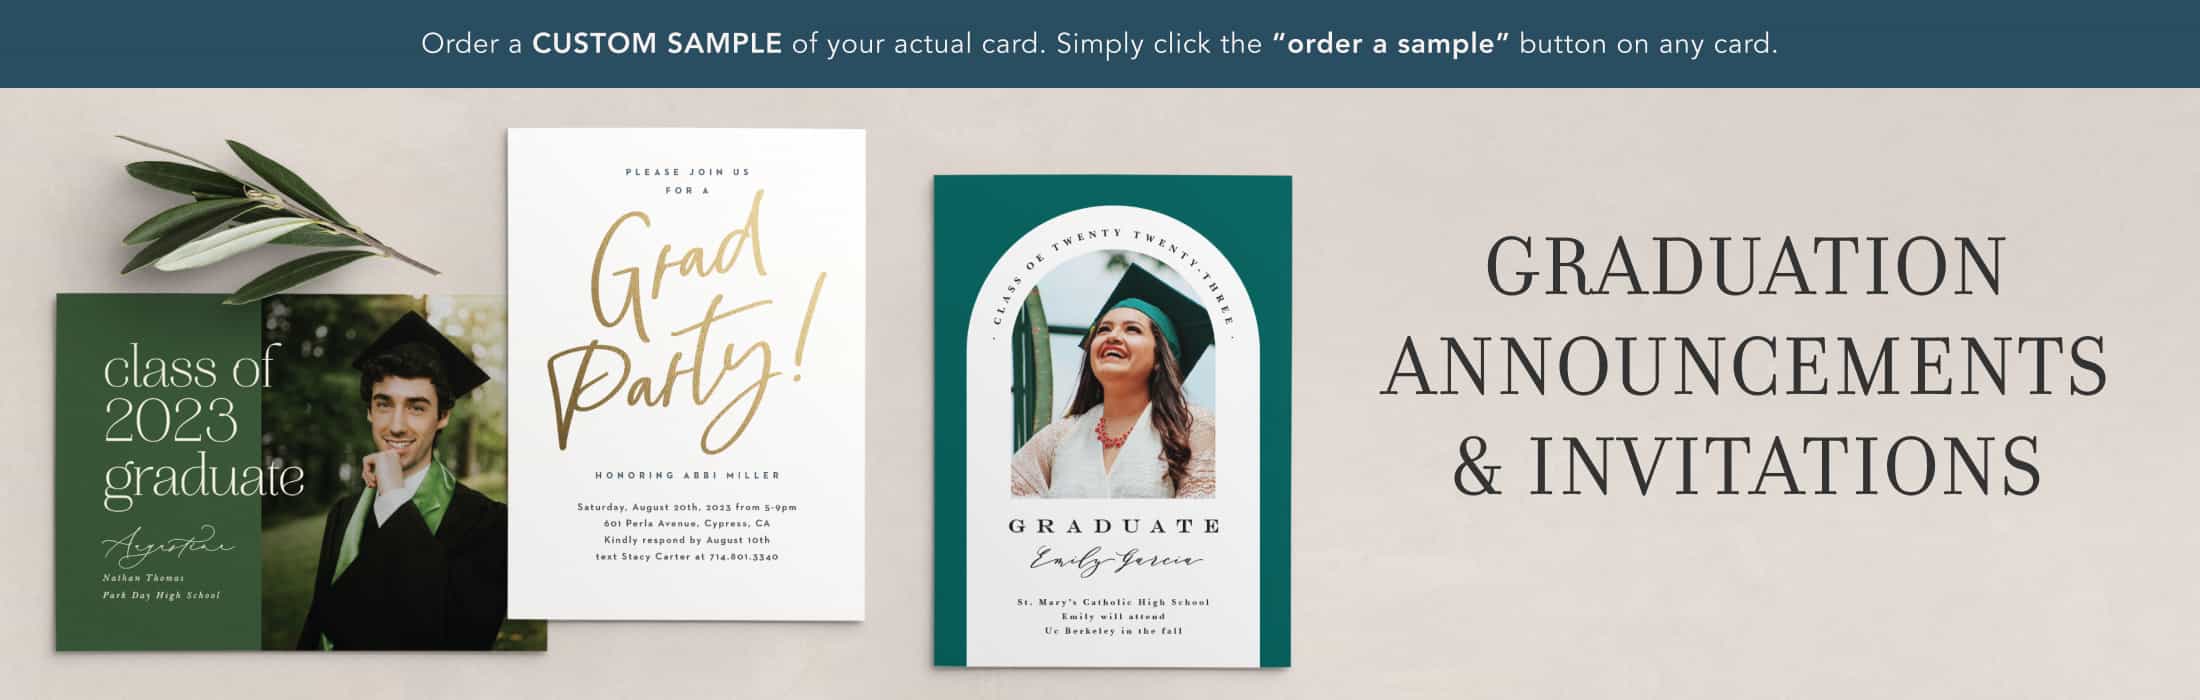 Graduation Stylin' Photo Collage Backdrop Personalized 